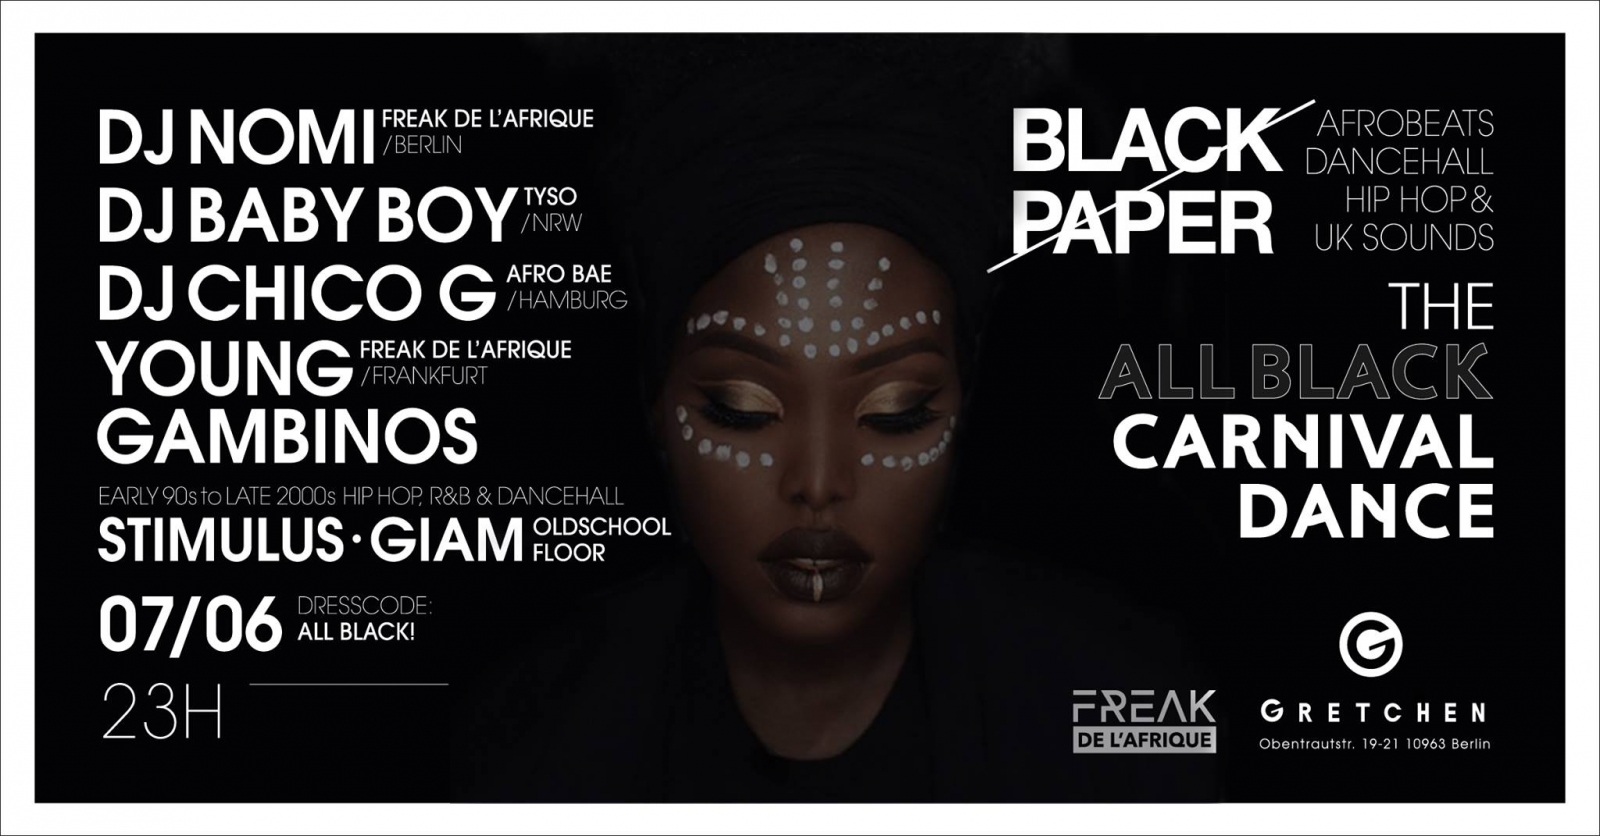 Black Paper - The ALL BLACK Carnival Dance 2019 poster